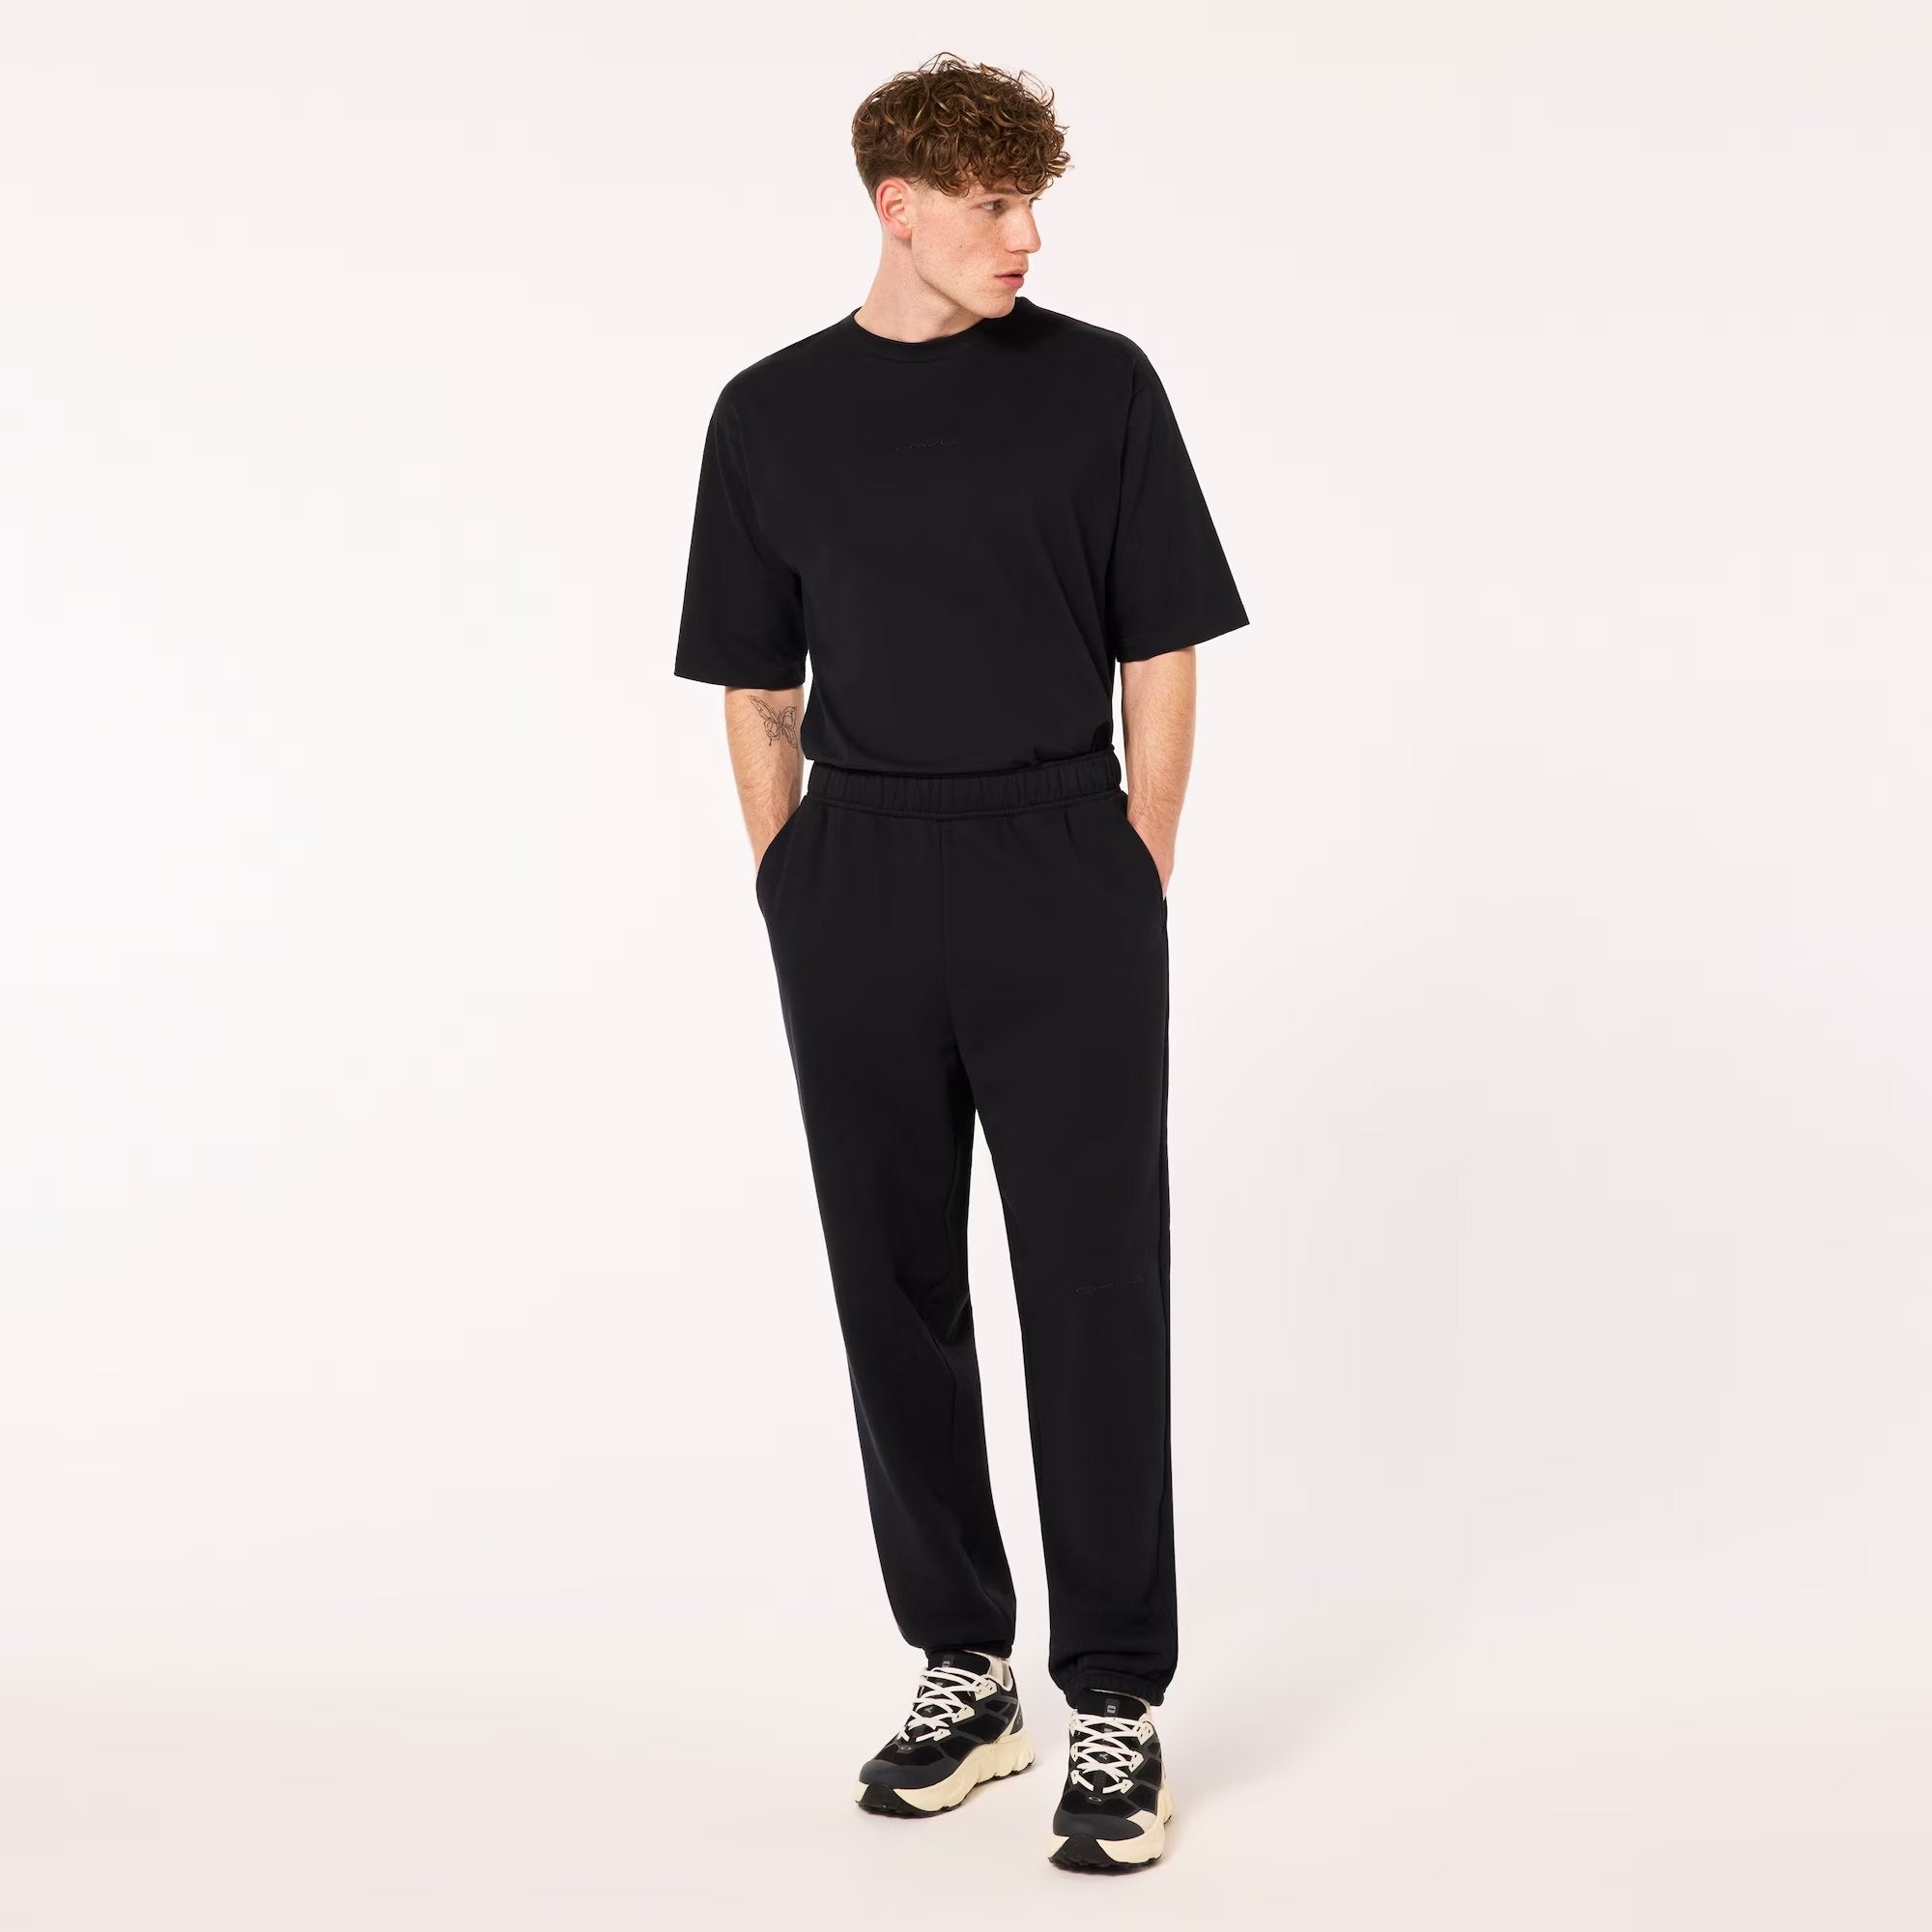  Oakley Men's Soho Sweatpant 3.0, Blackout : Clothing